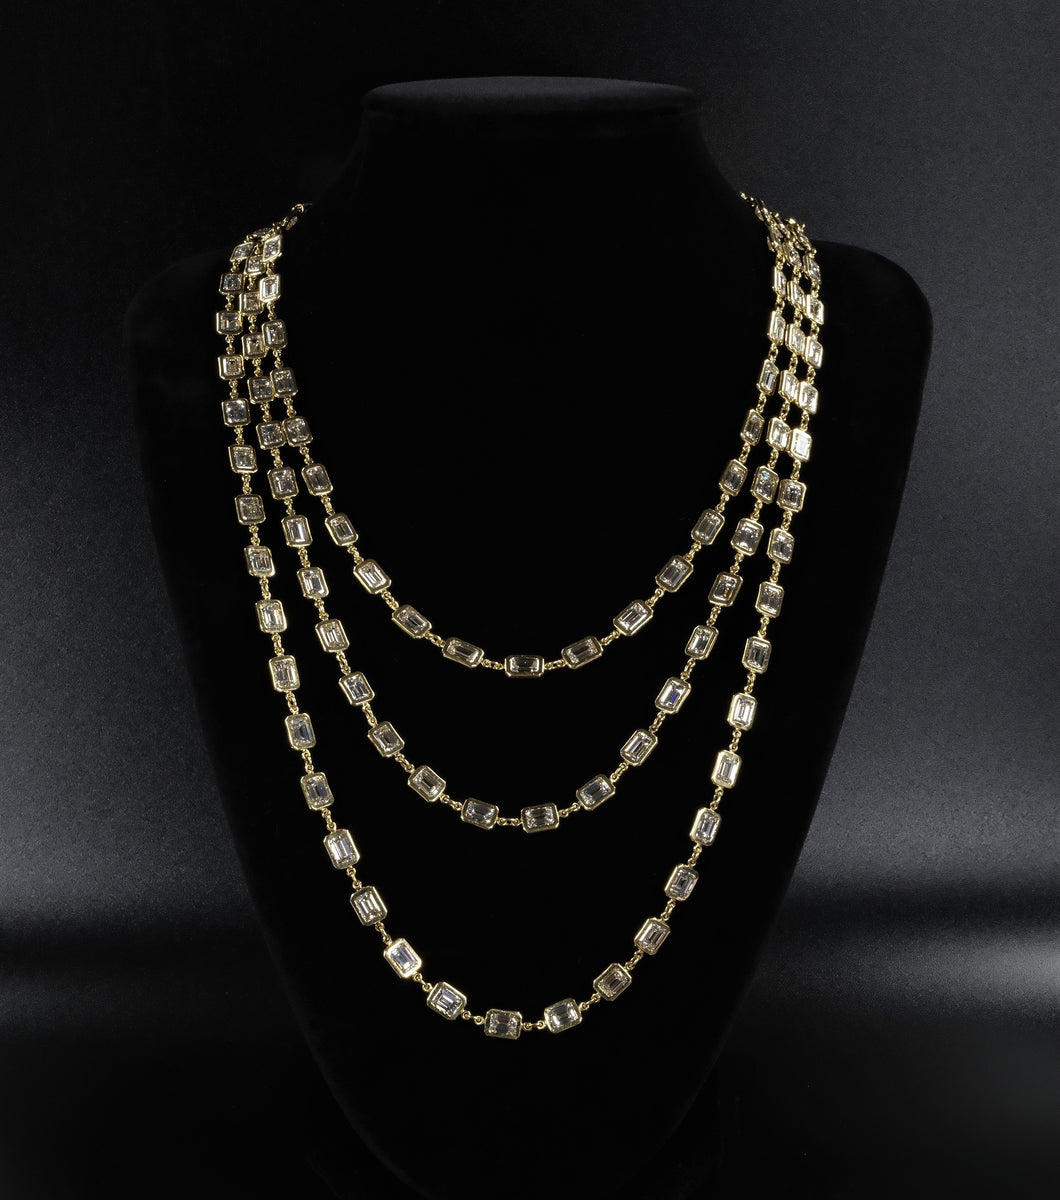 Diamond Necklace - Two Piece 18K Yellow Gold With 126 Emerald Cut Diamonds 67.79TCW